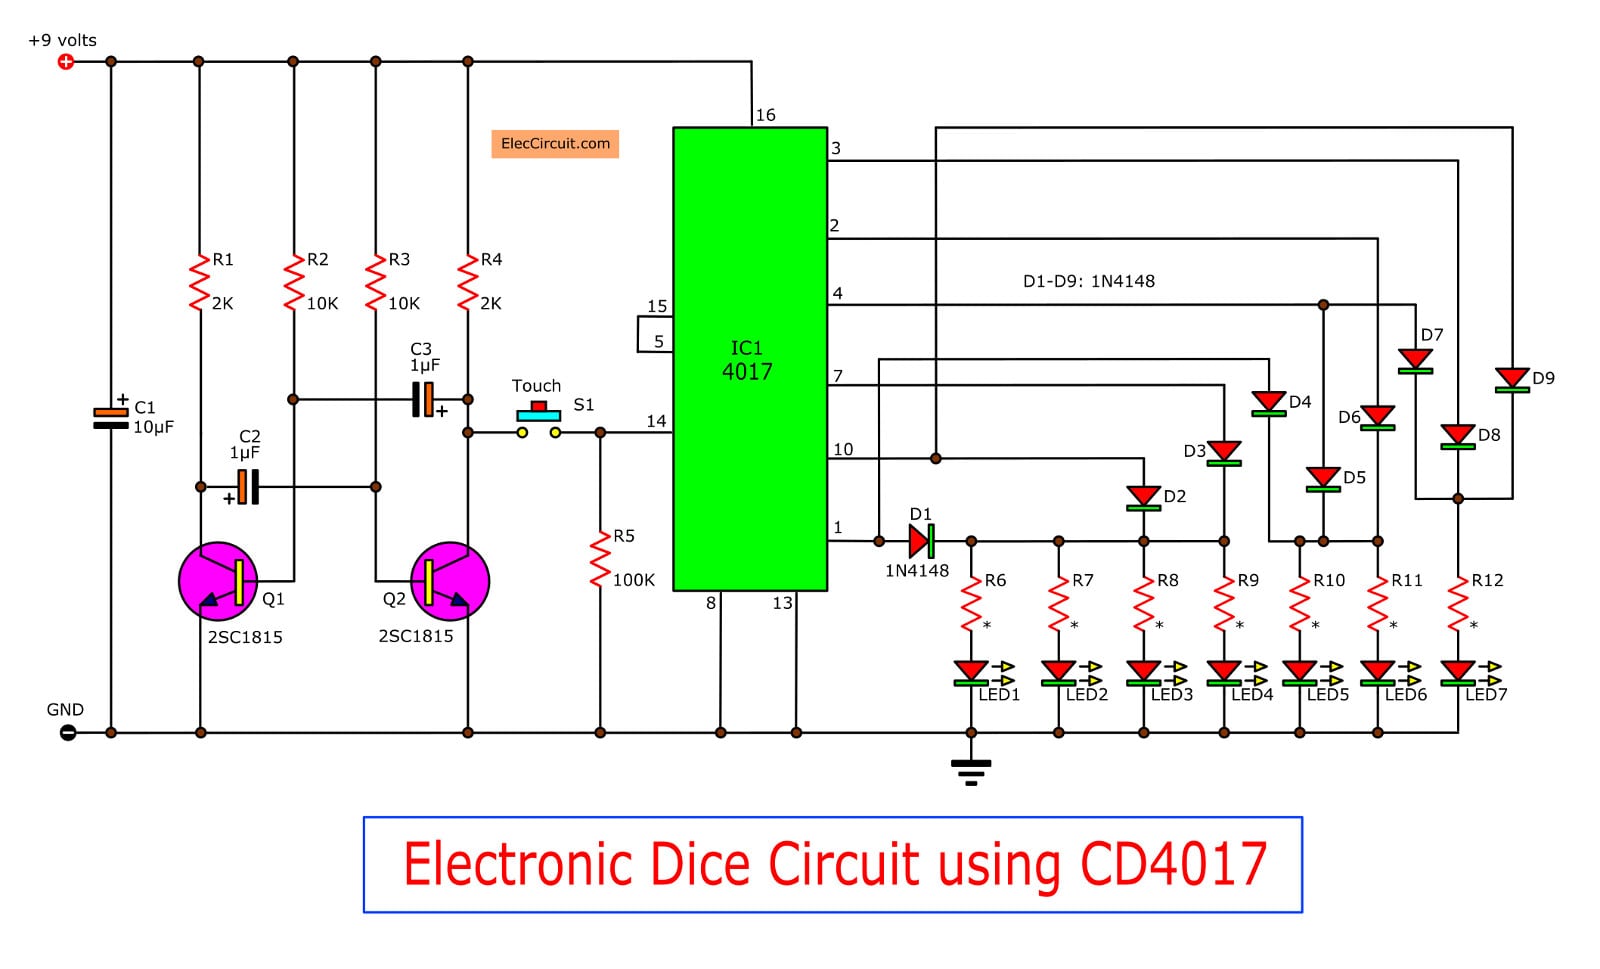 Electronic dice circuit using CD4017